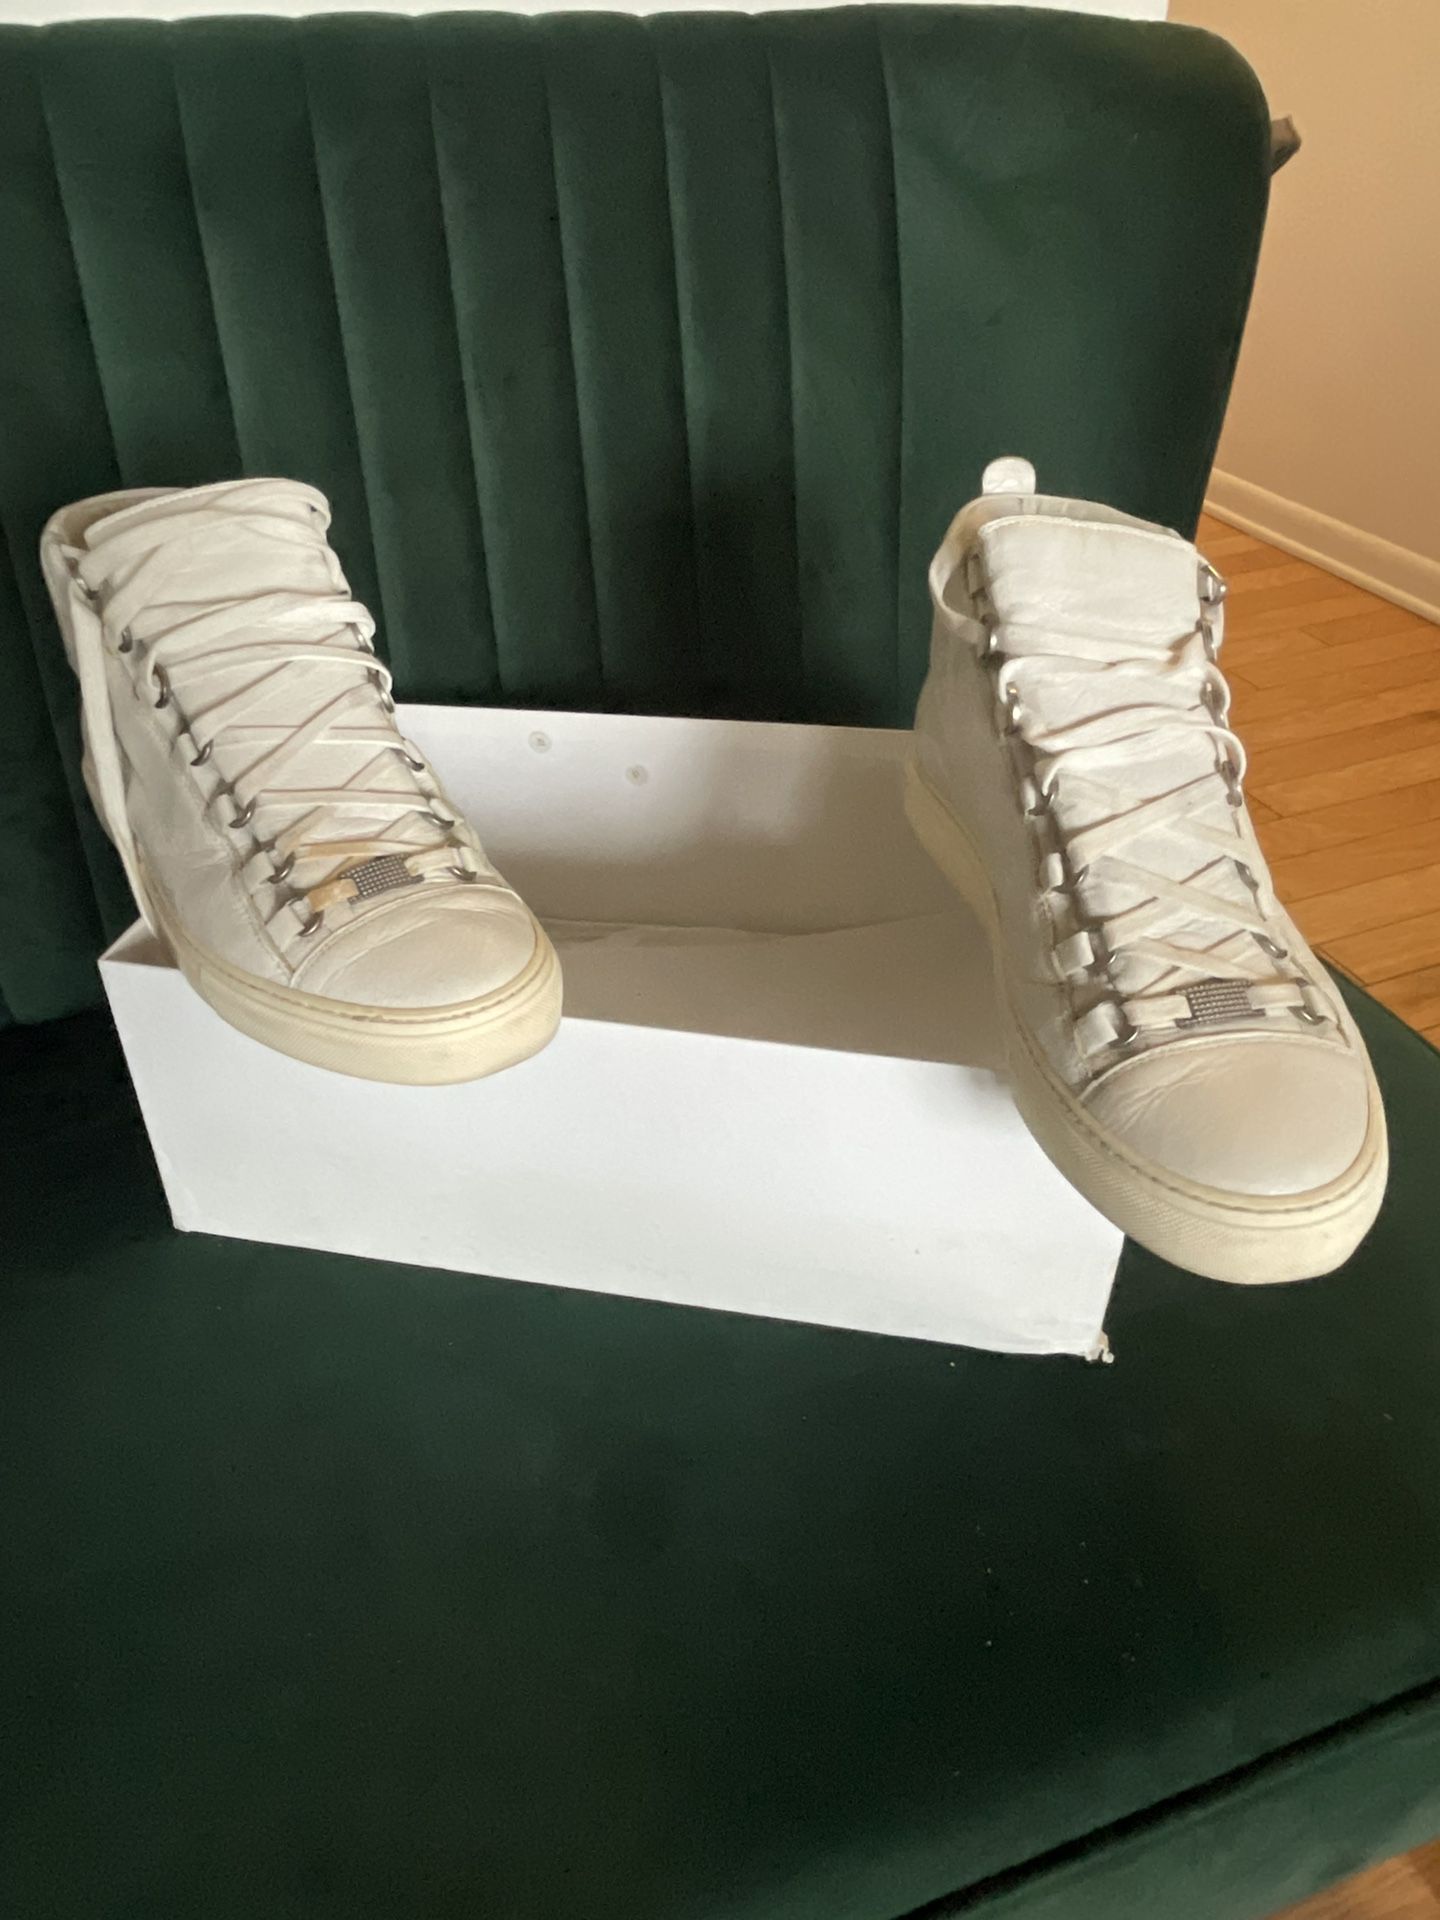 Jolly Bakkerij Phalanx Men's Balenciaga Arena Sneakers Size 41 for Sale in New York, NY - OfferUp